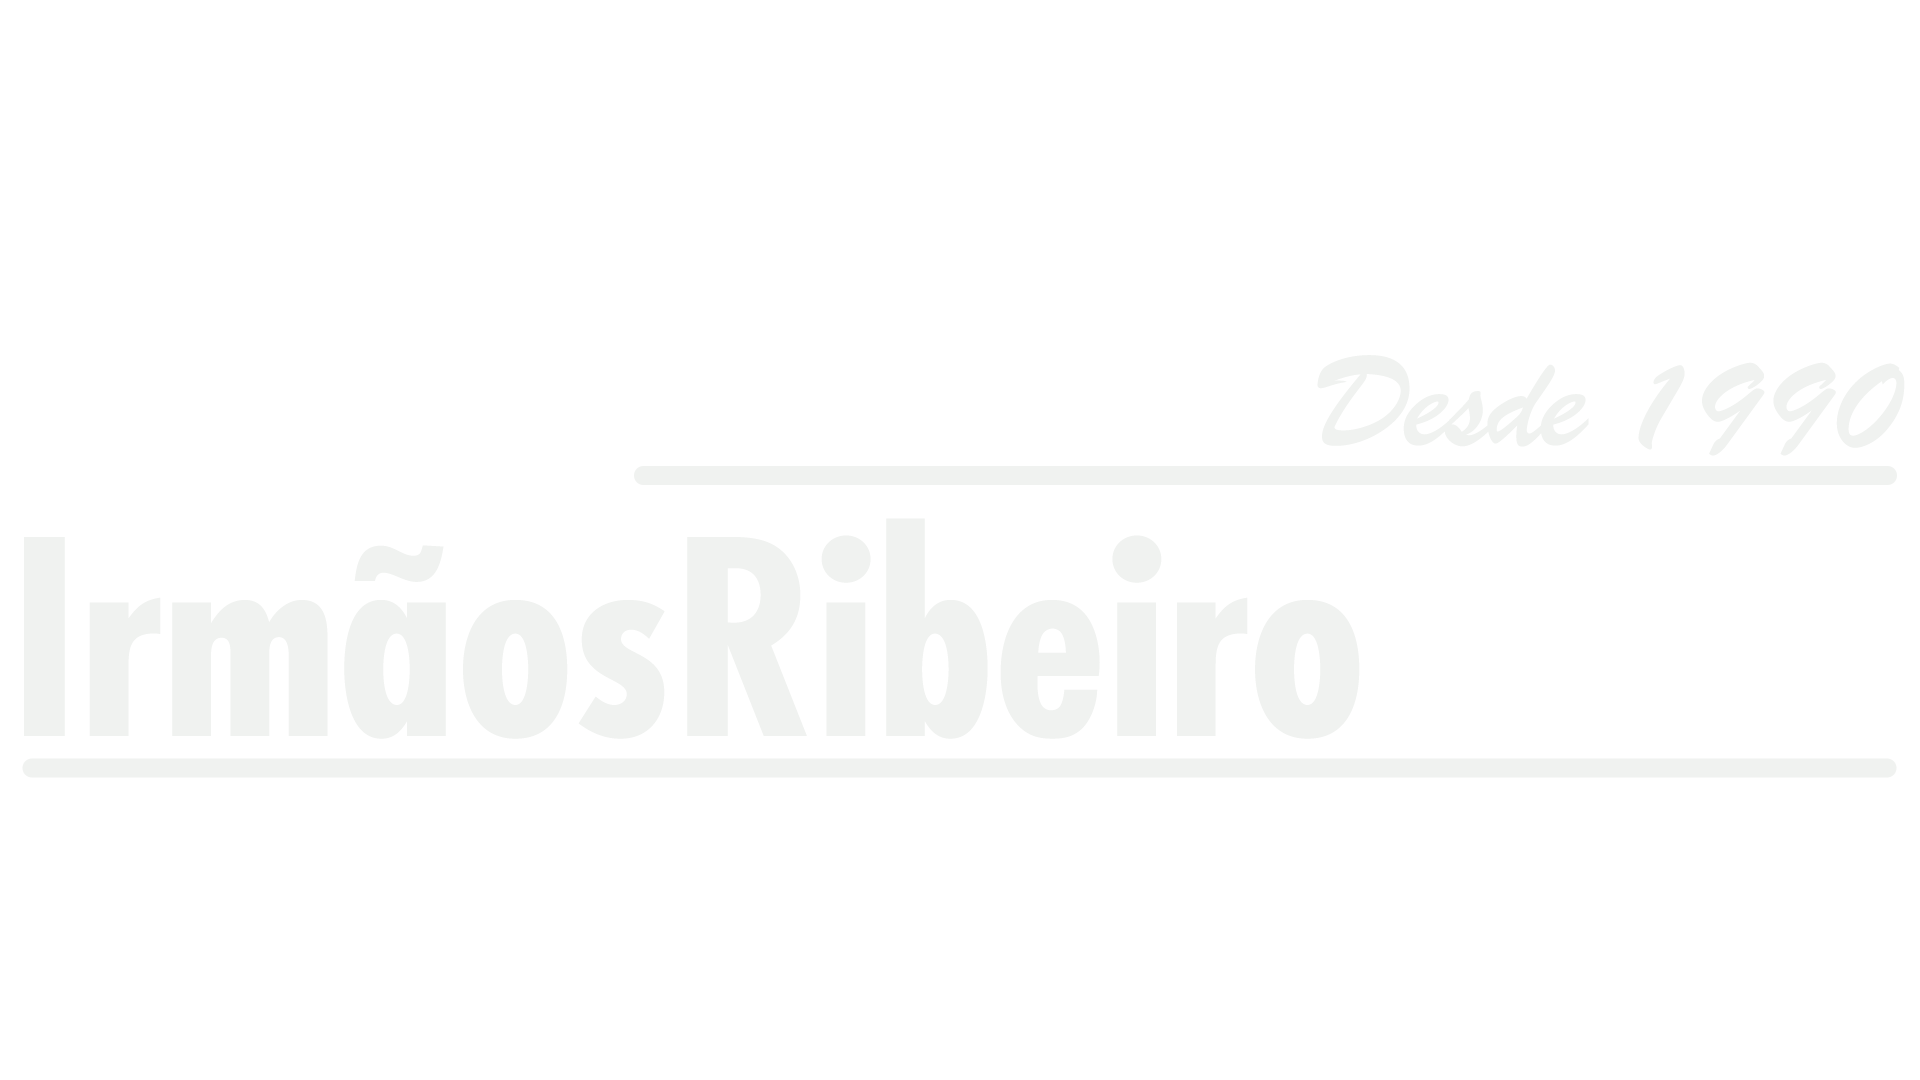 Logotipo Marcenaria Irmãos Ribeiro